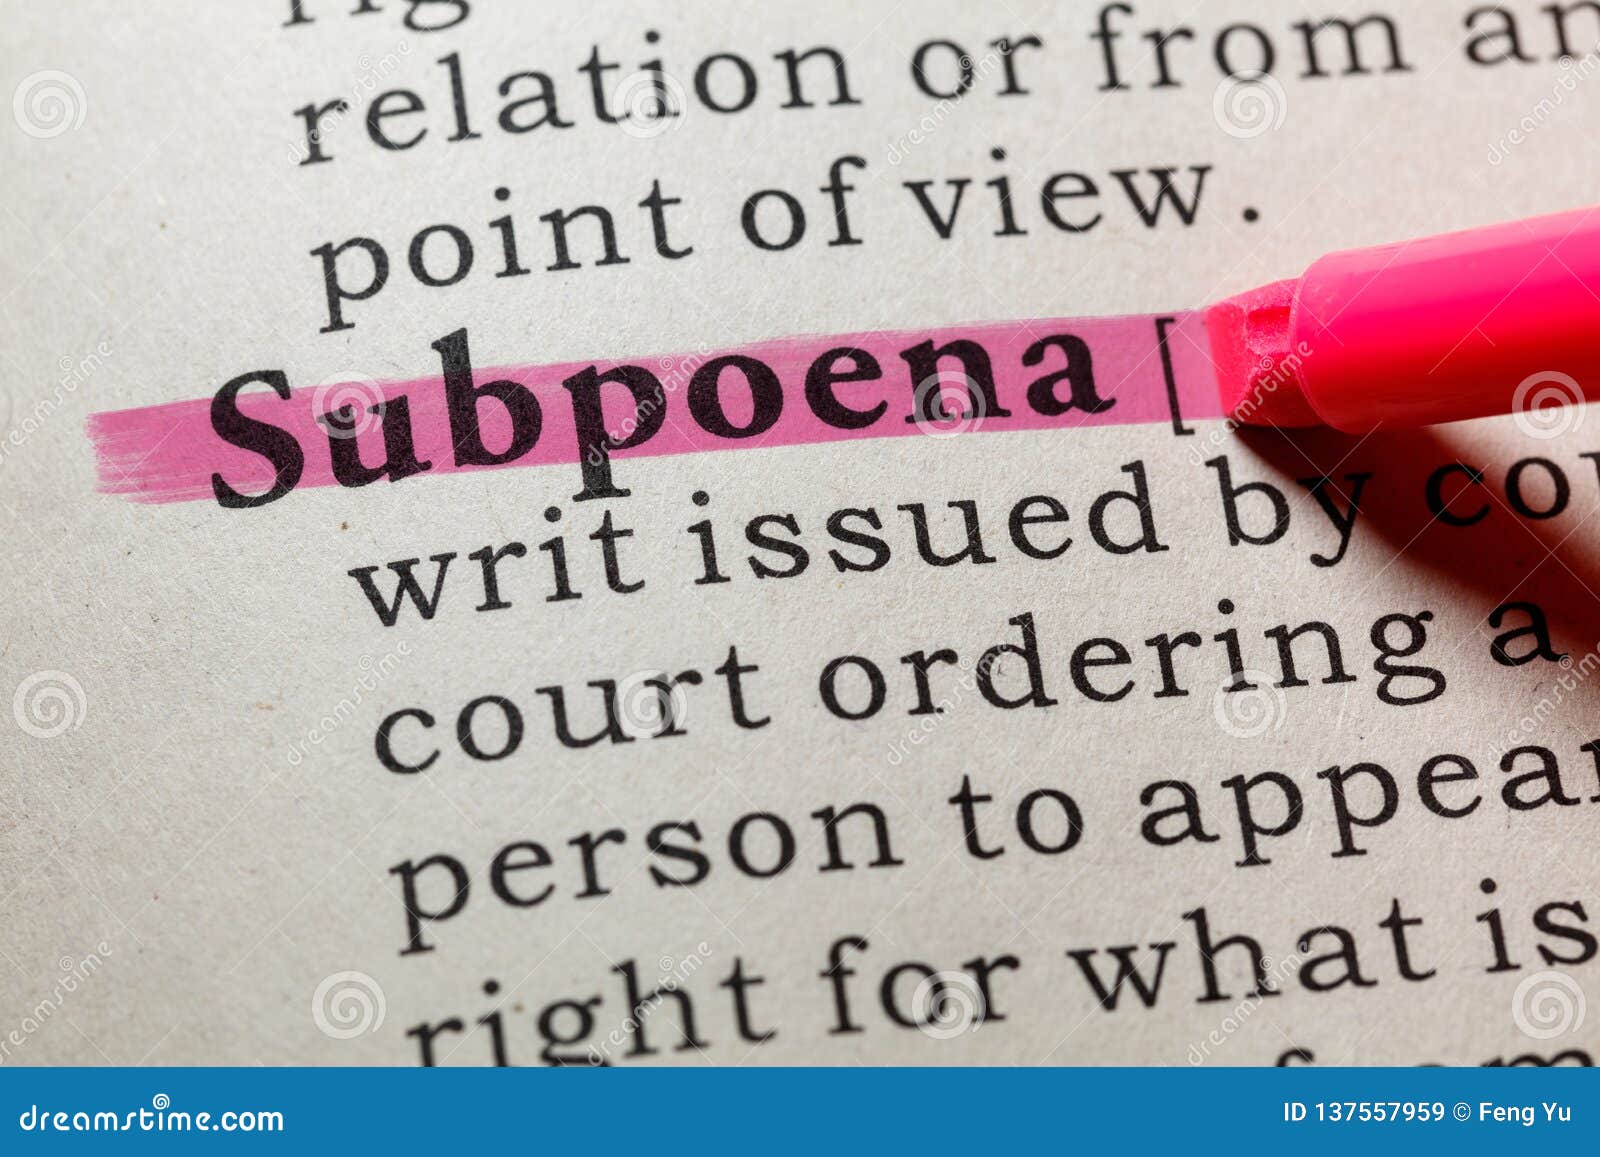 definition of subpoena